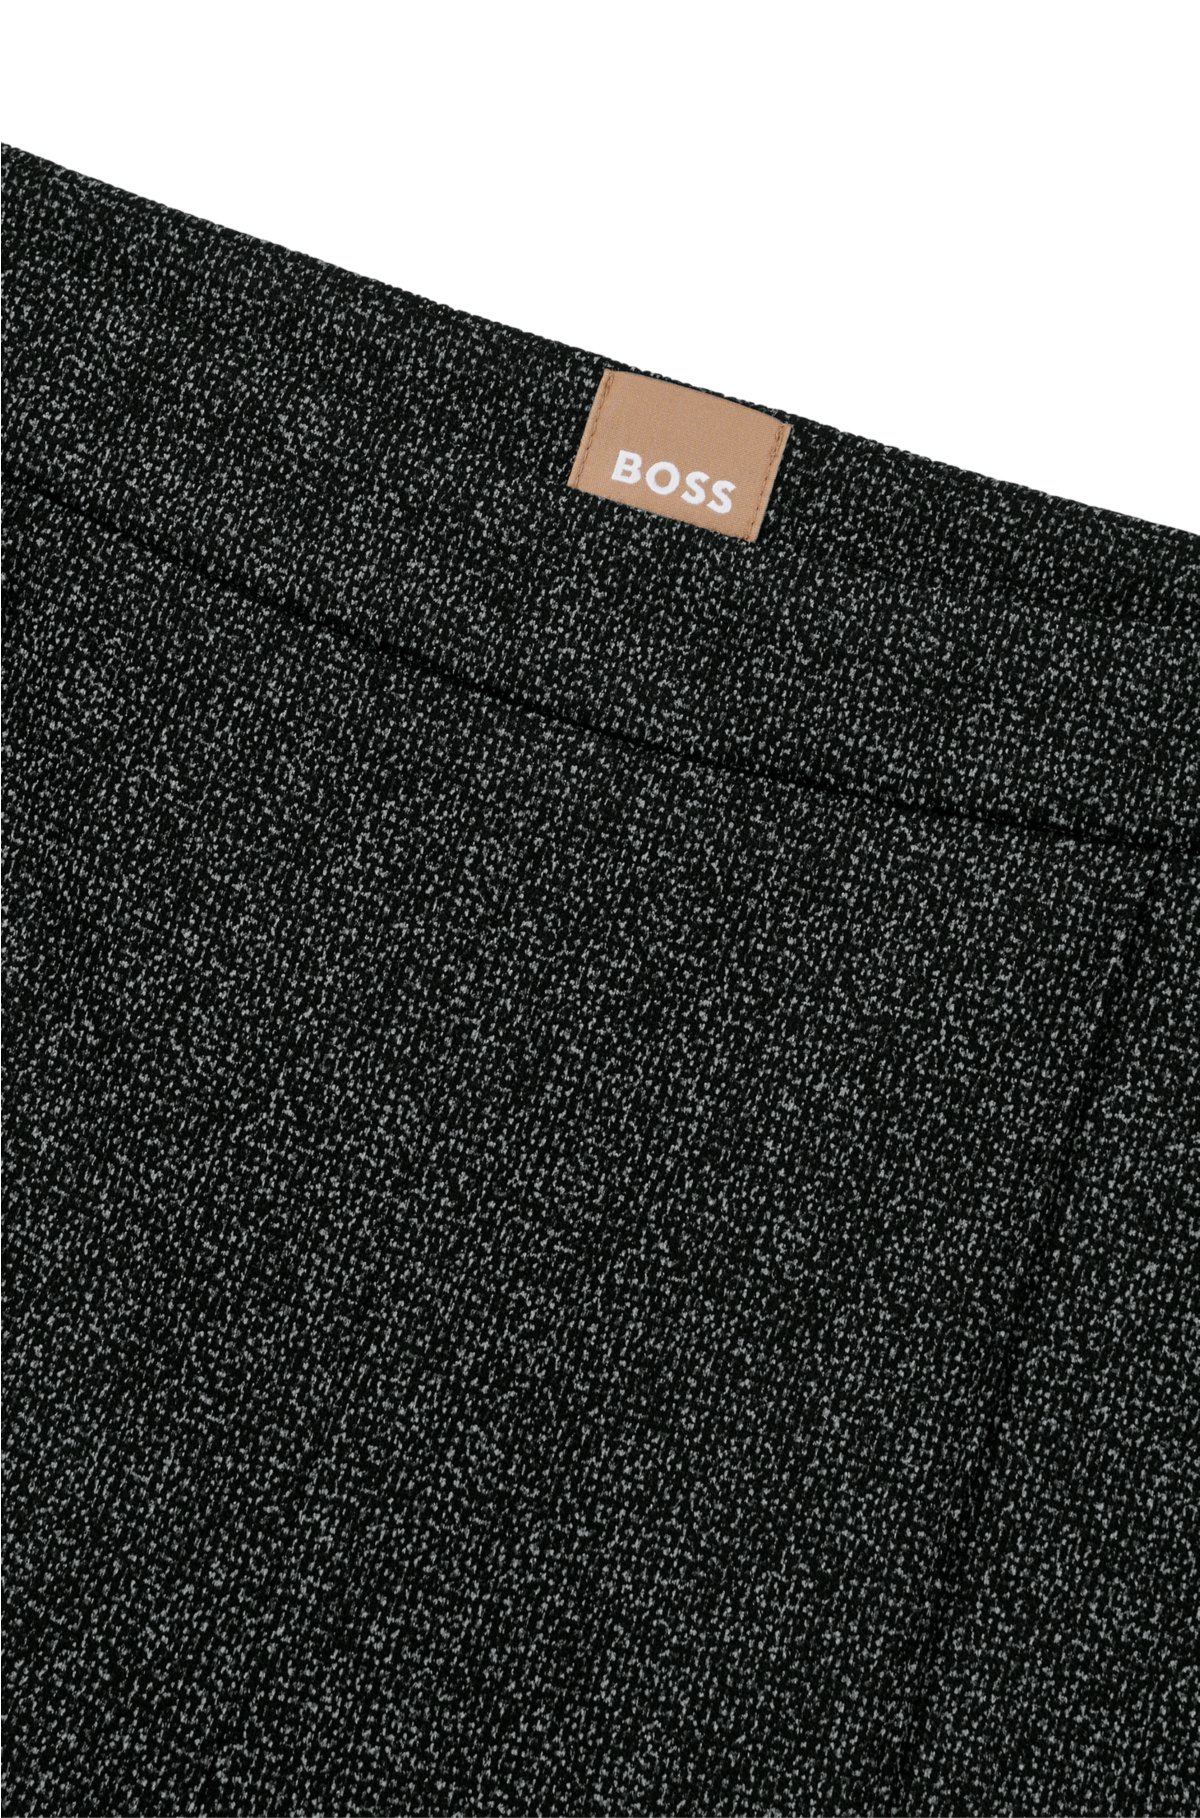 Slim-fit high-rise trousers in stretch jersey, Dark Grey